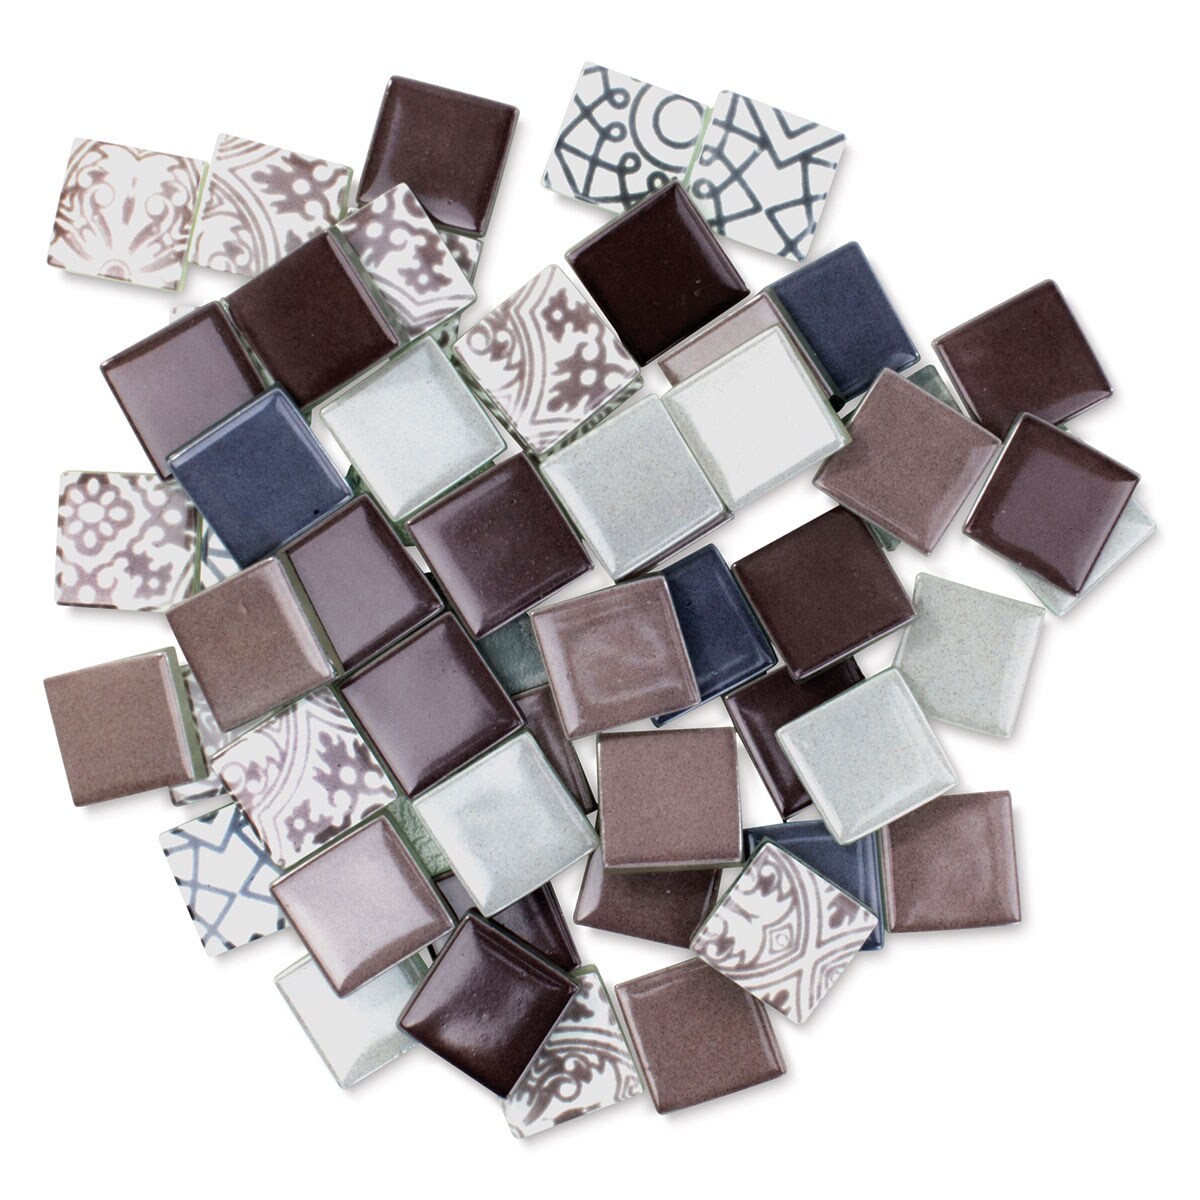 Mosaic Mercantile Patchwork Tiles - Heather Purple/Grey, 1 lb